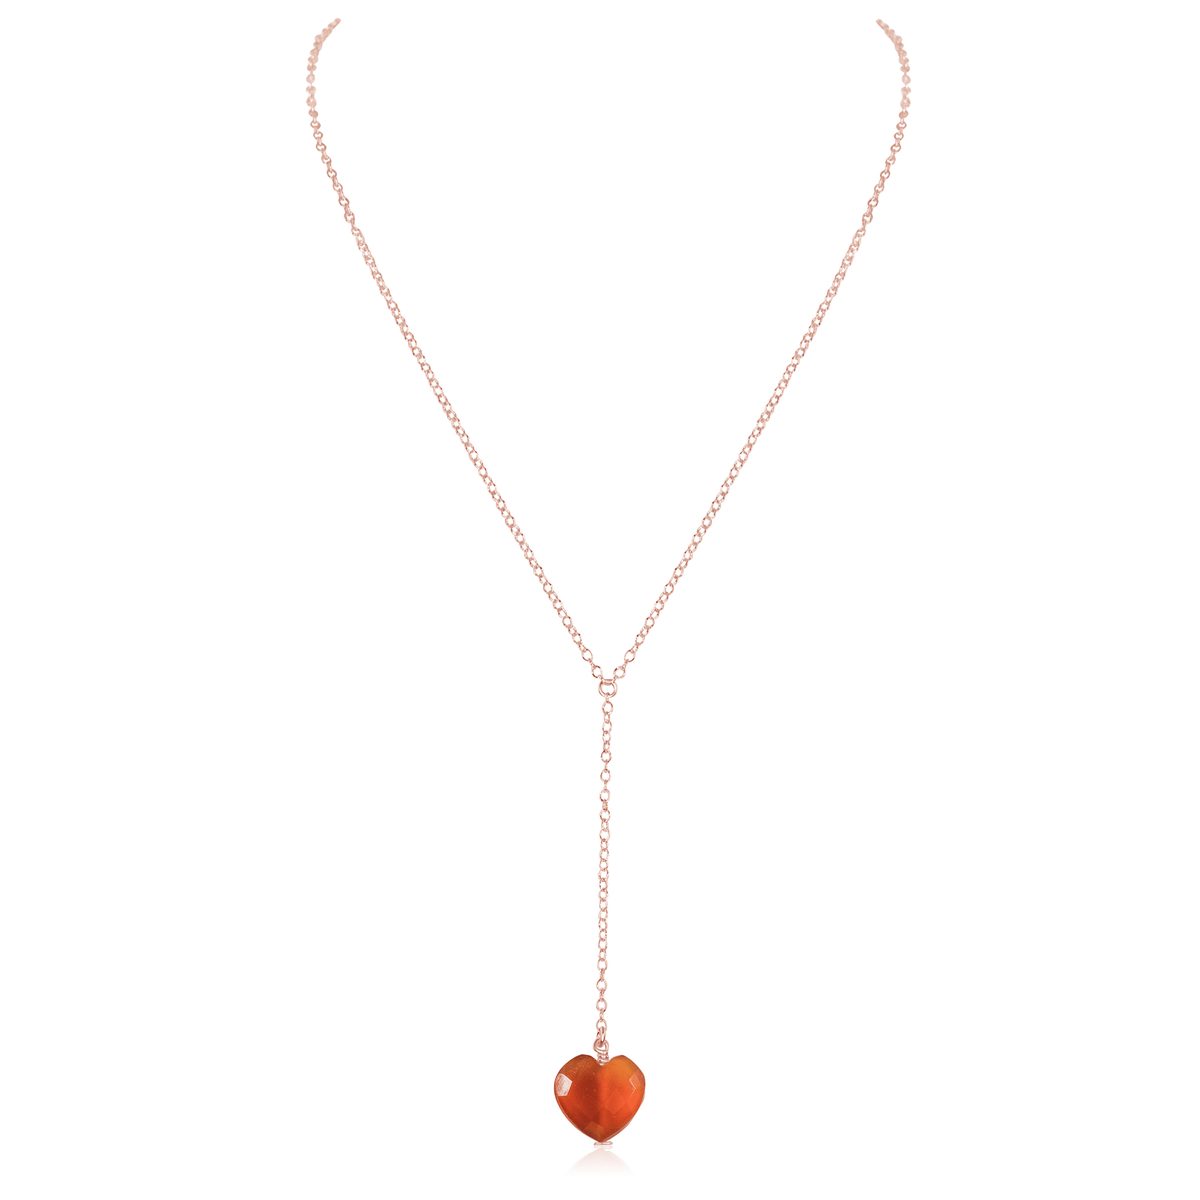 Carnelian Crystal Heart Lariat Necklace - Carnelian Crystal Heart Lariat Necklace - 14k Rose Gold Fill - Luna Tide Handmade Crystal Jewellery